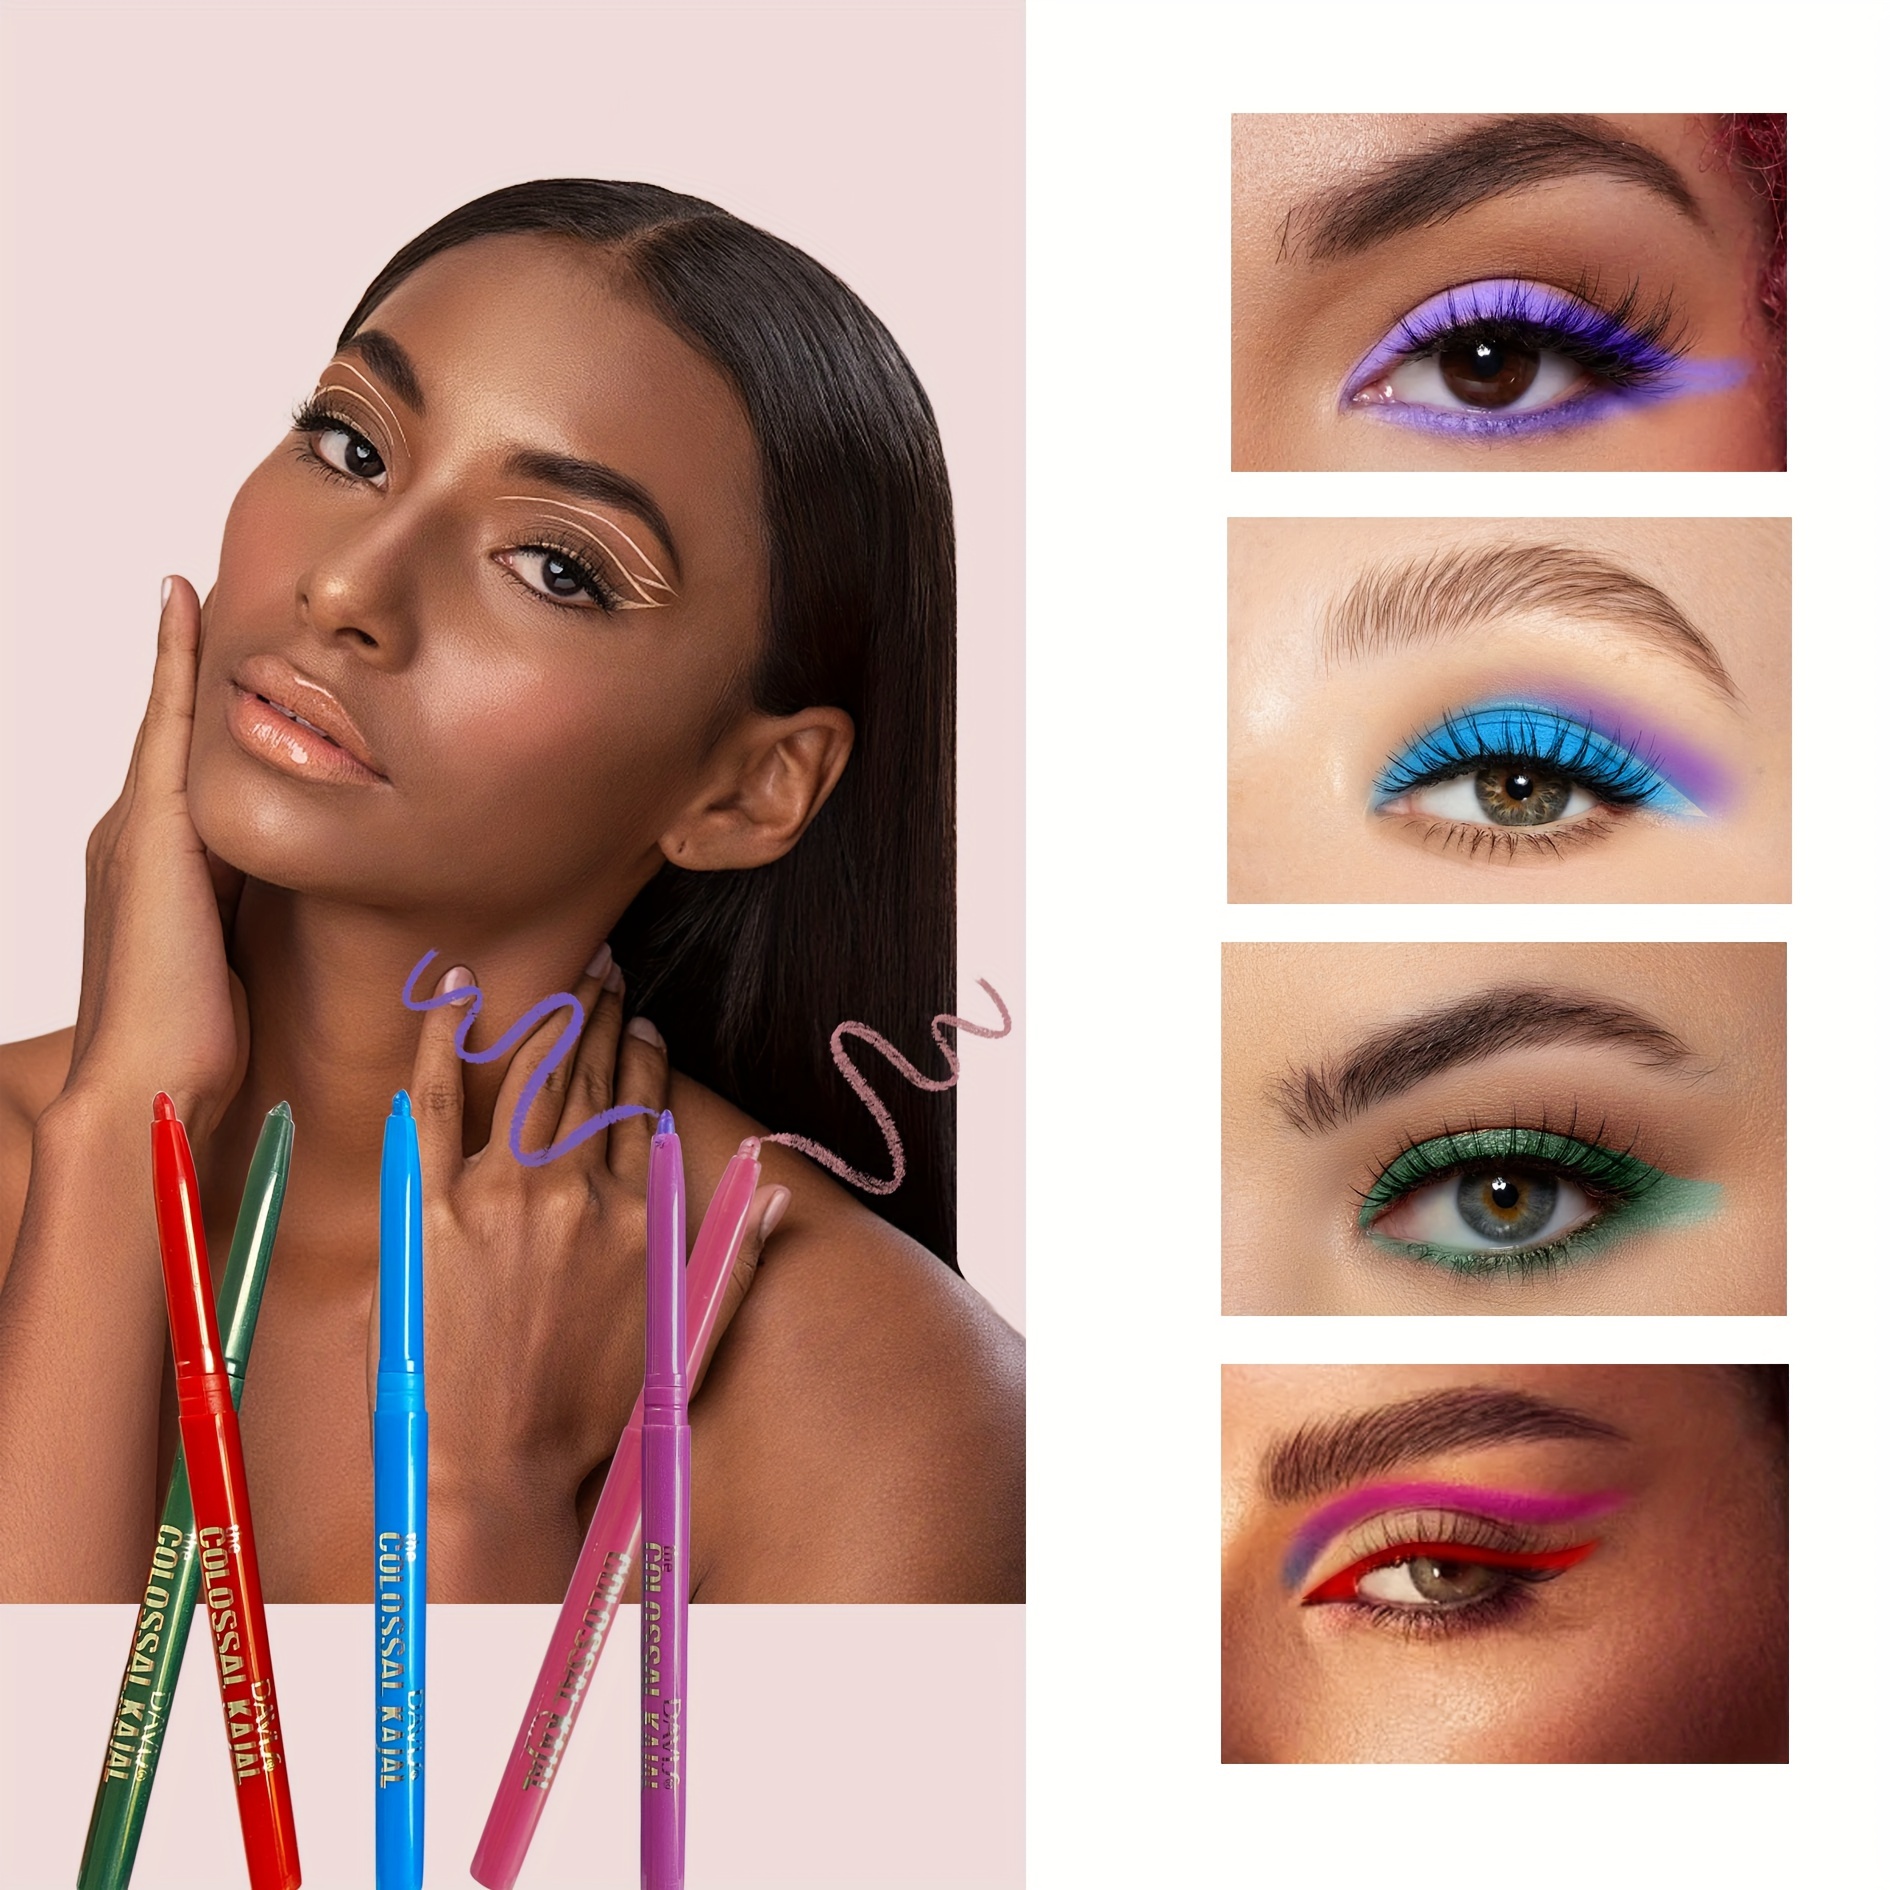 

Eyeliner Eyeshadow Pencil, Smooth Waterproof Crayons, Long-lasting Multi-colored Eye Makeup Sticks, Vivid Pigmented Cosmetic Liners For Artistic Eye Definition